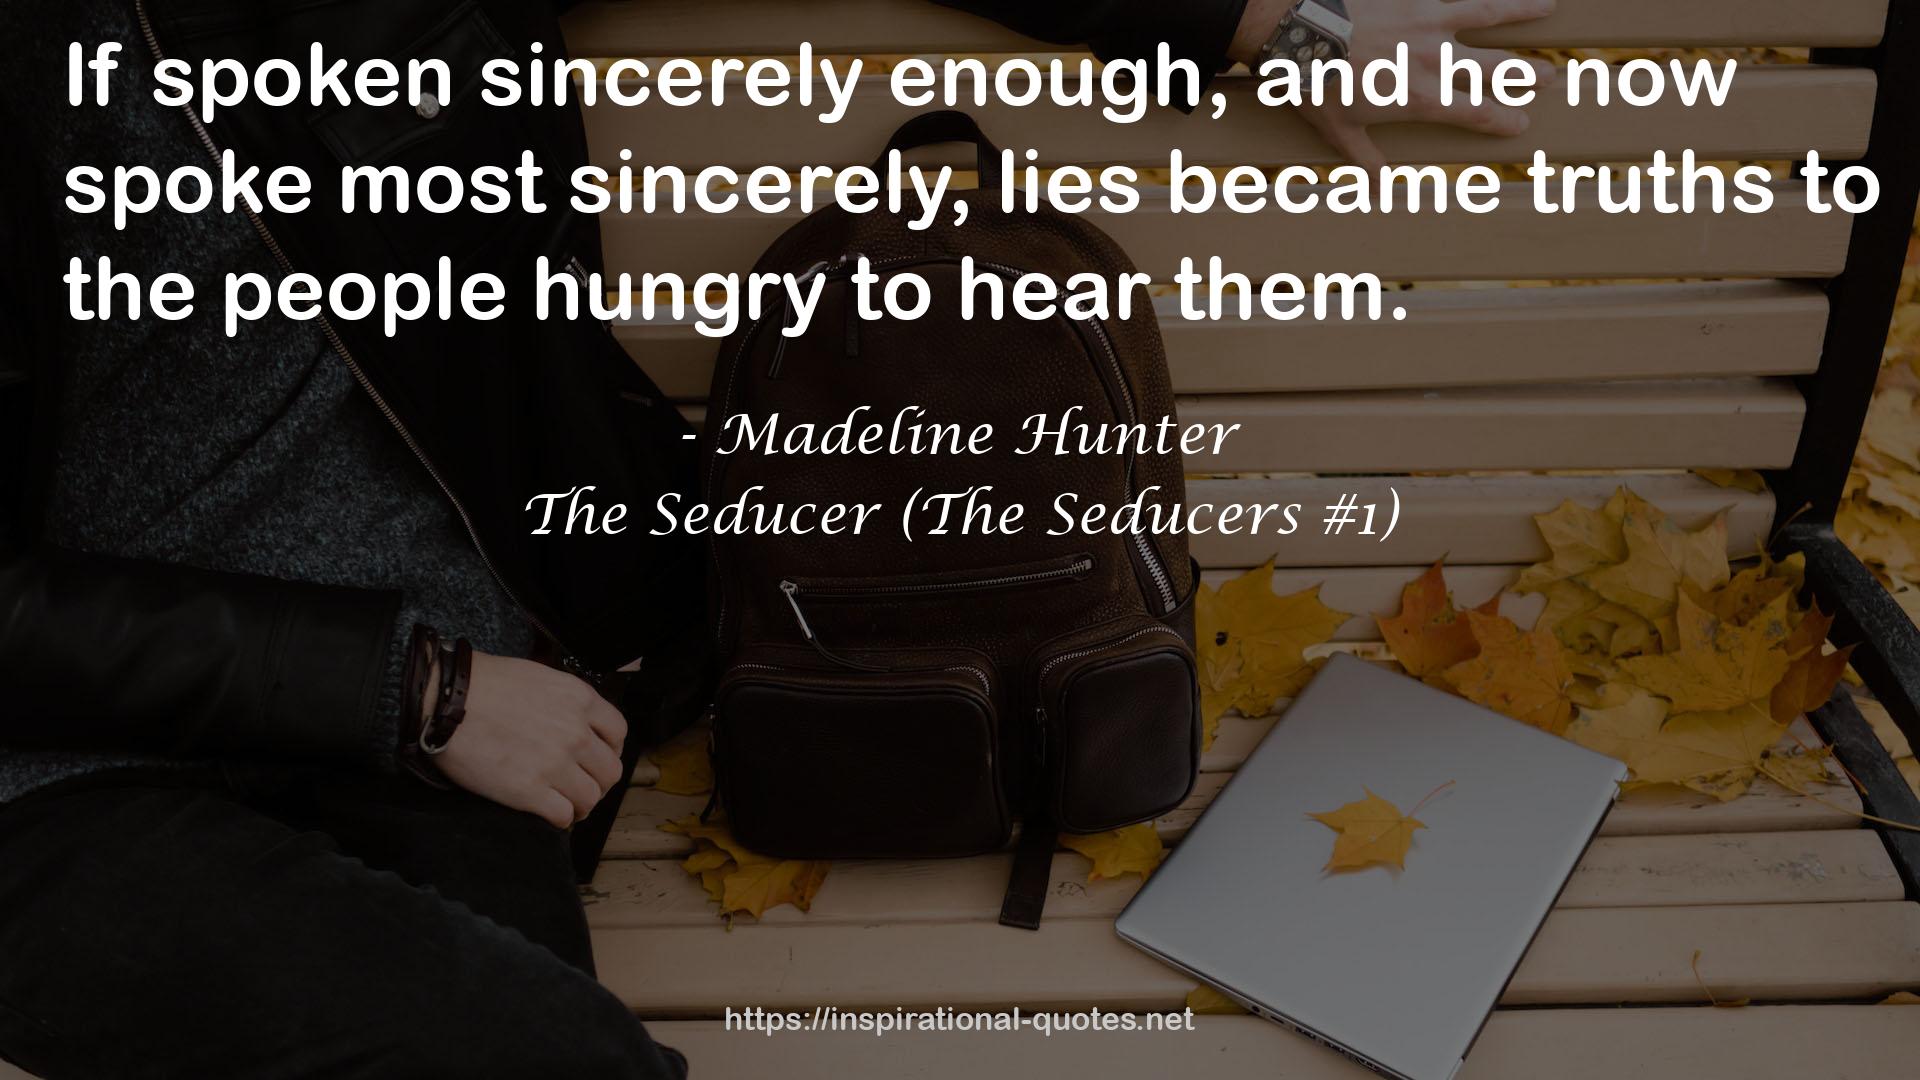 The Seducer (The Seducers #1) QUOTES